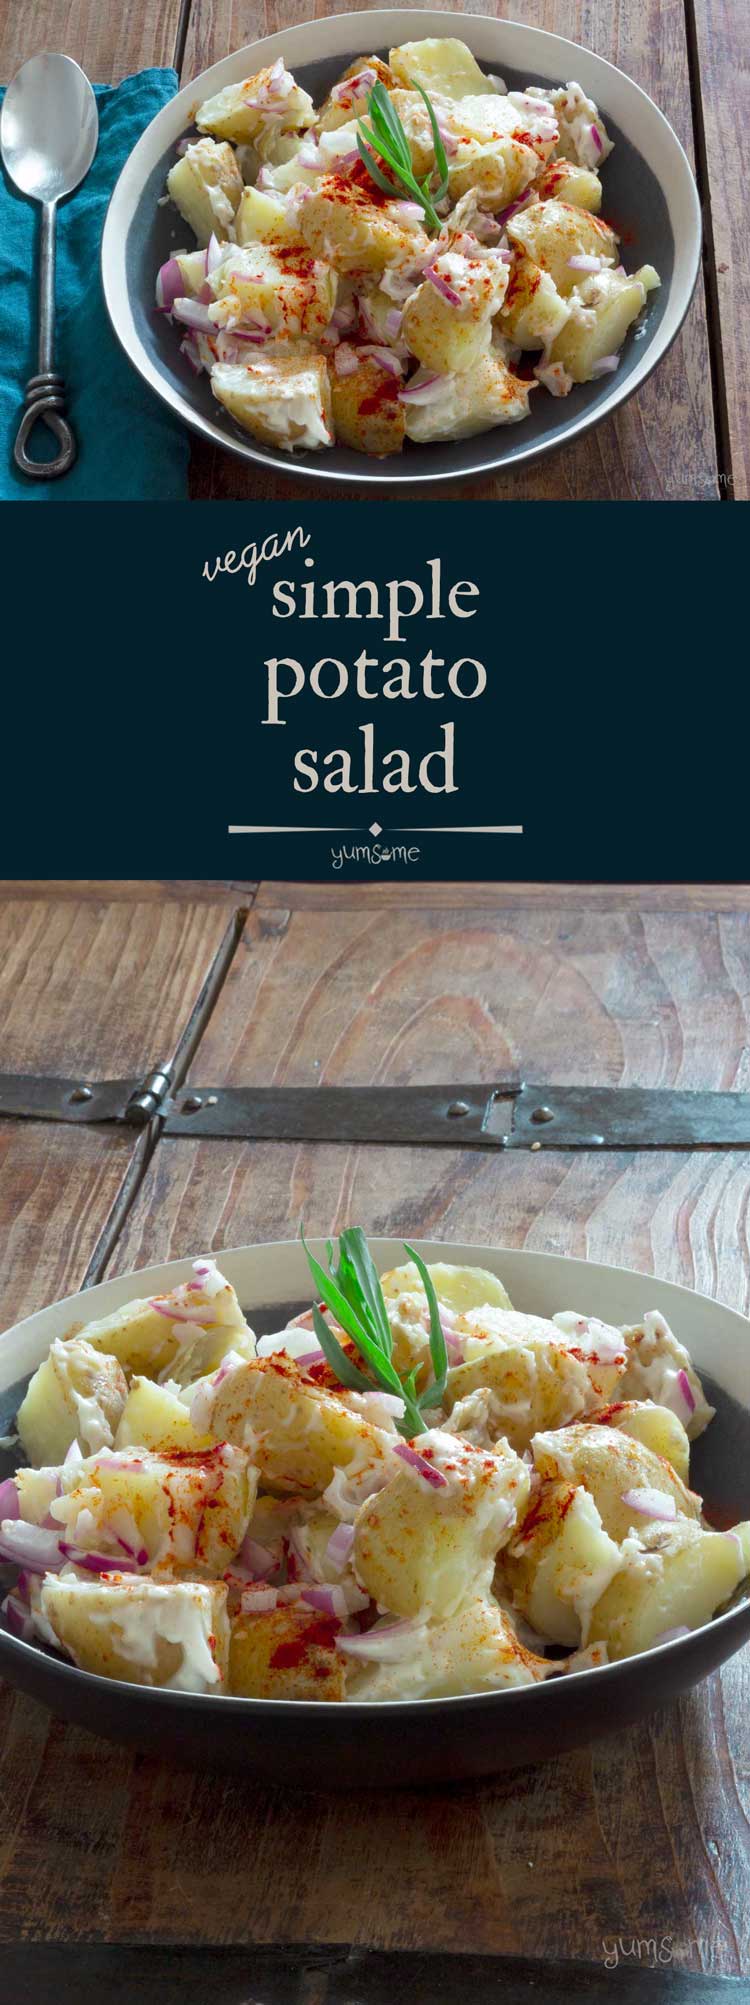 Simple Vegan Potato Salad